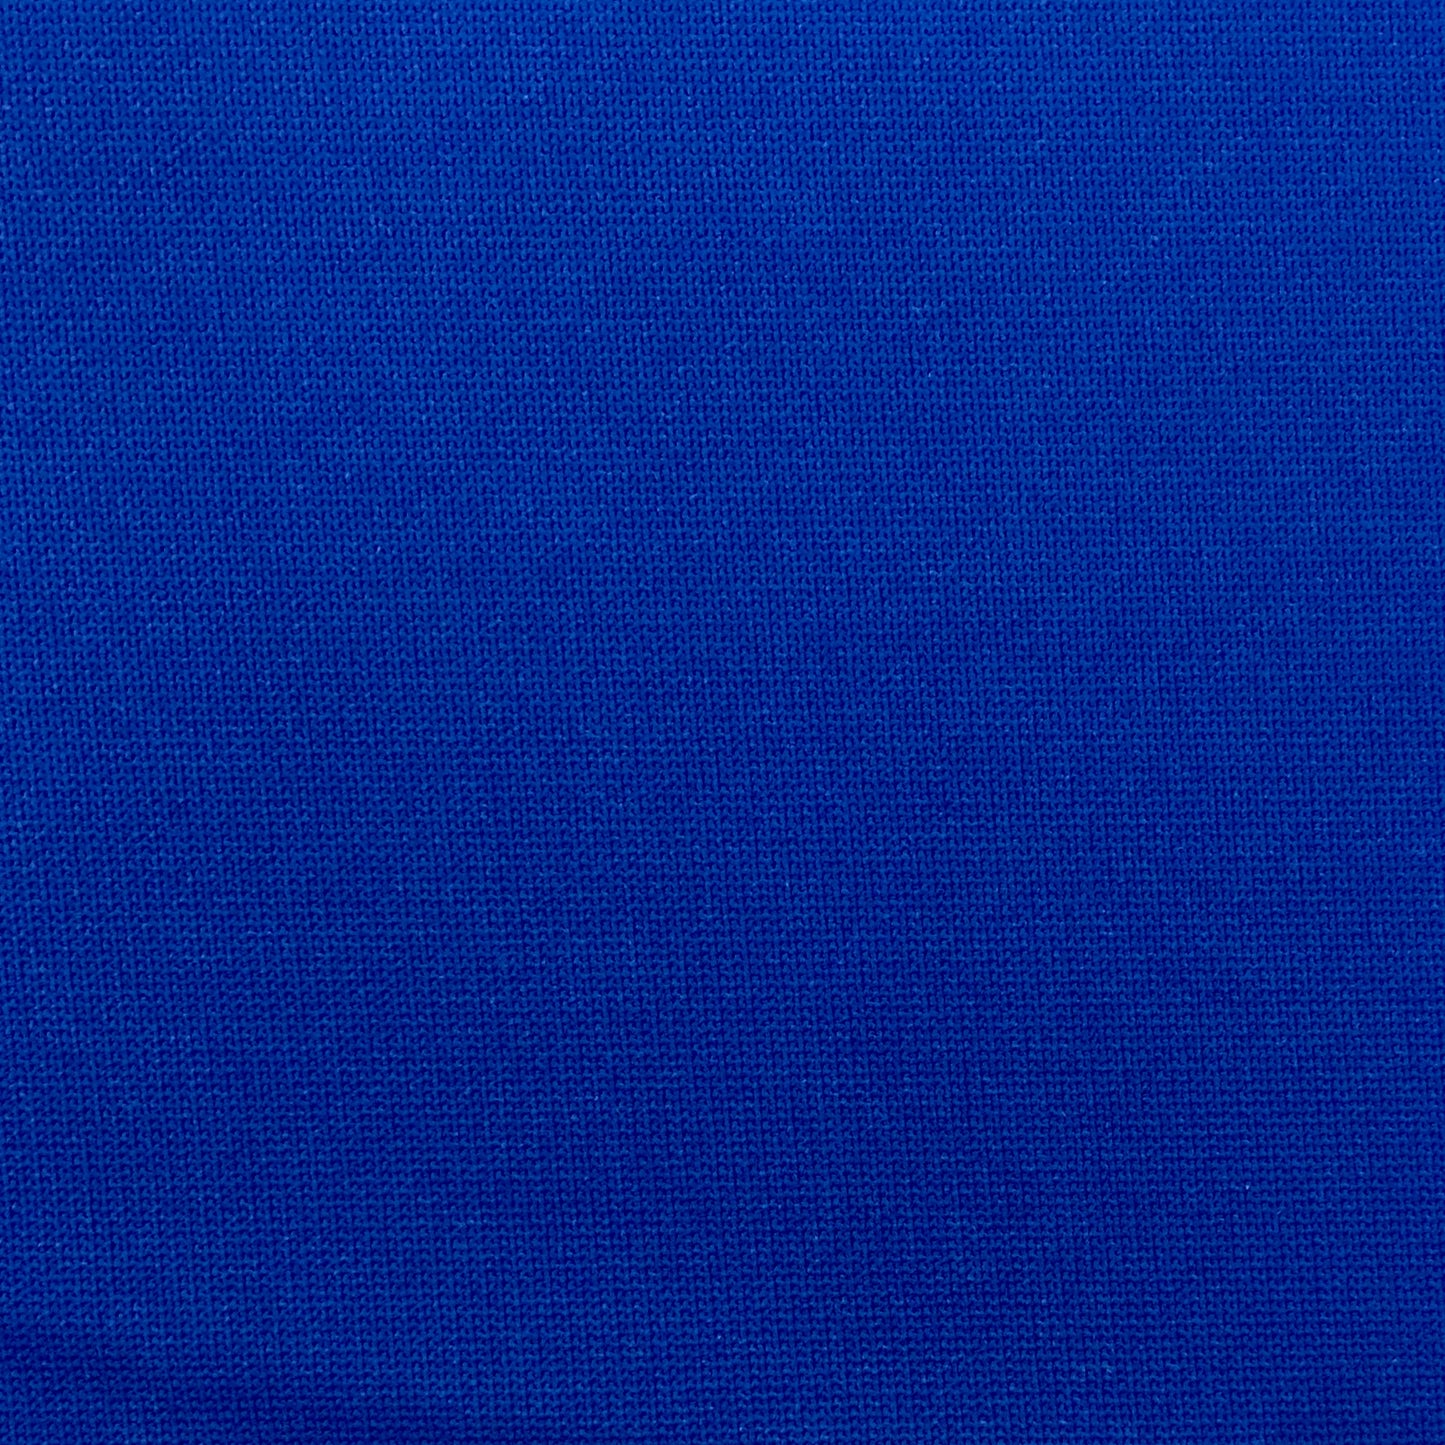 Bolsa de tela reutilizable de poliéster 150D - Azul real (se vende por yarda)